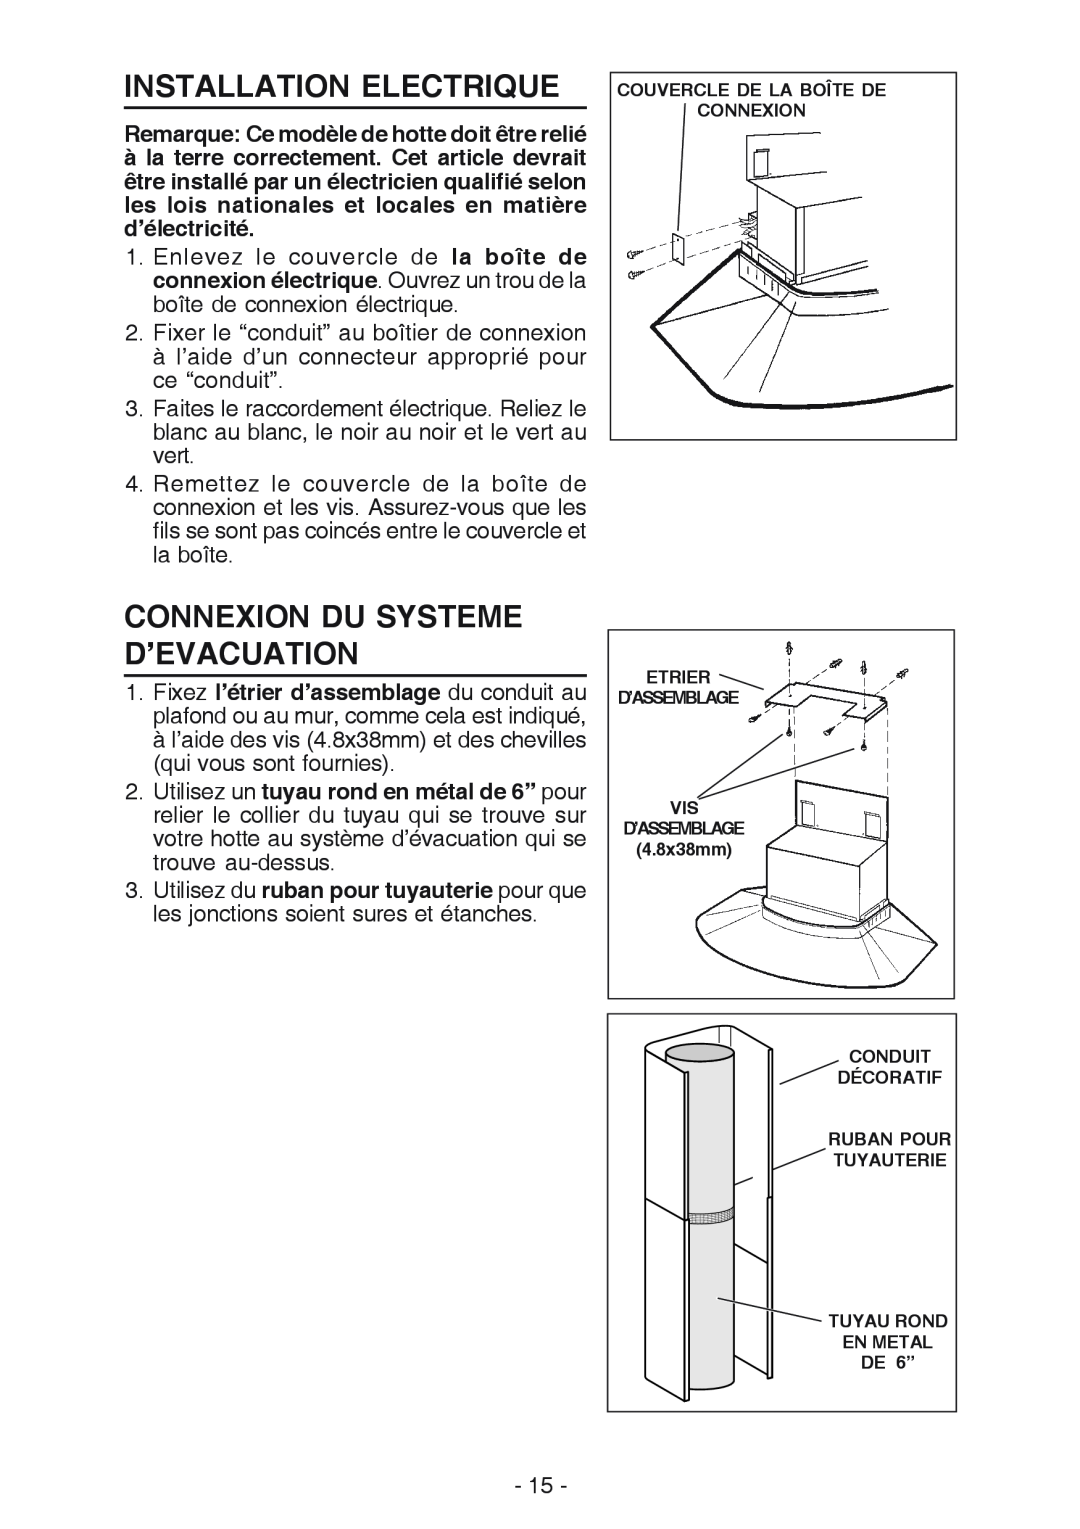 NuTone NP629004 manual Installation Electrique, Connexion Du Systeme D’Evacuation 